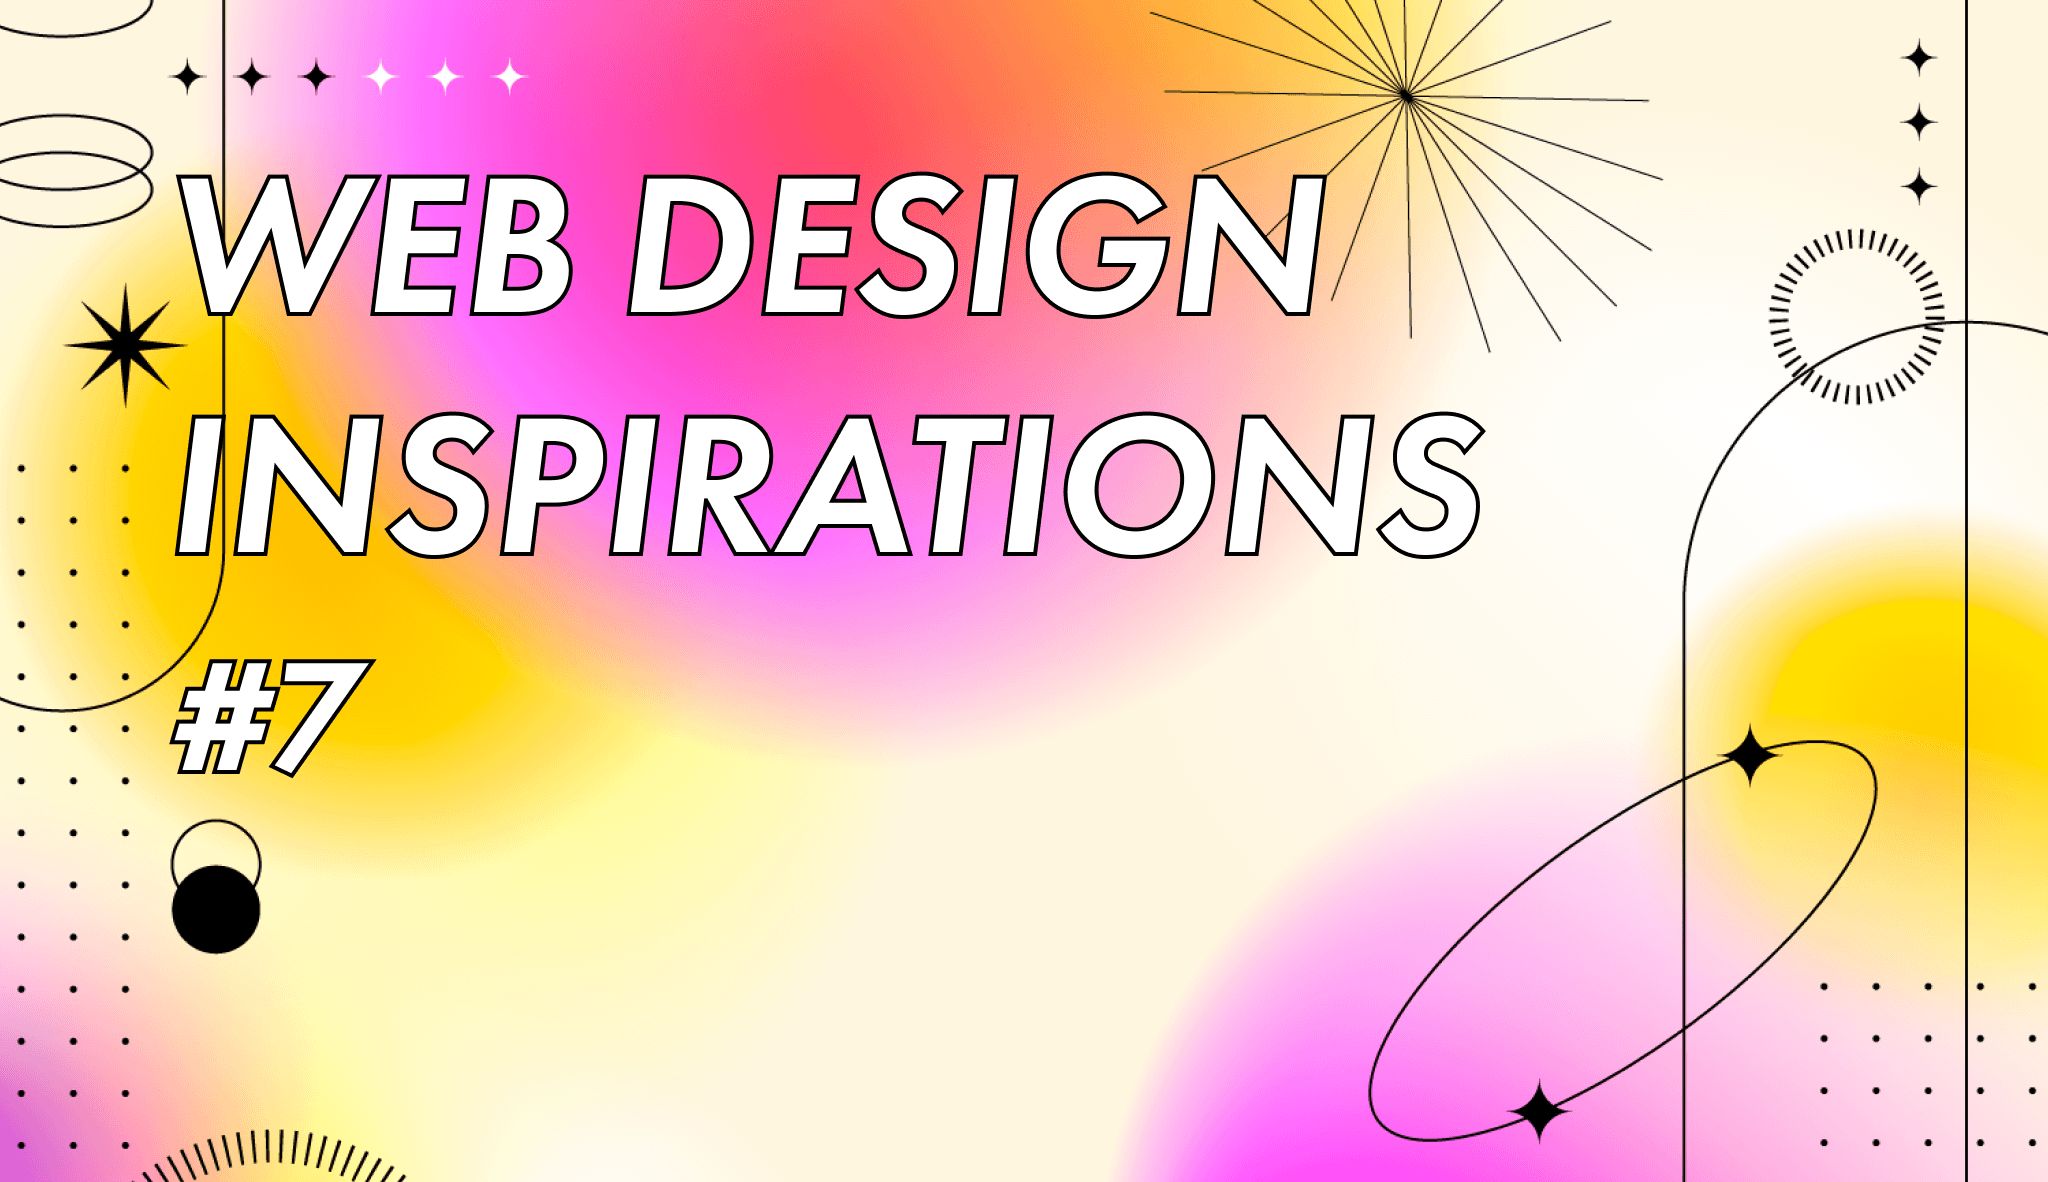 Web Design Inspirations #7